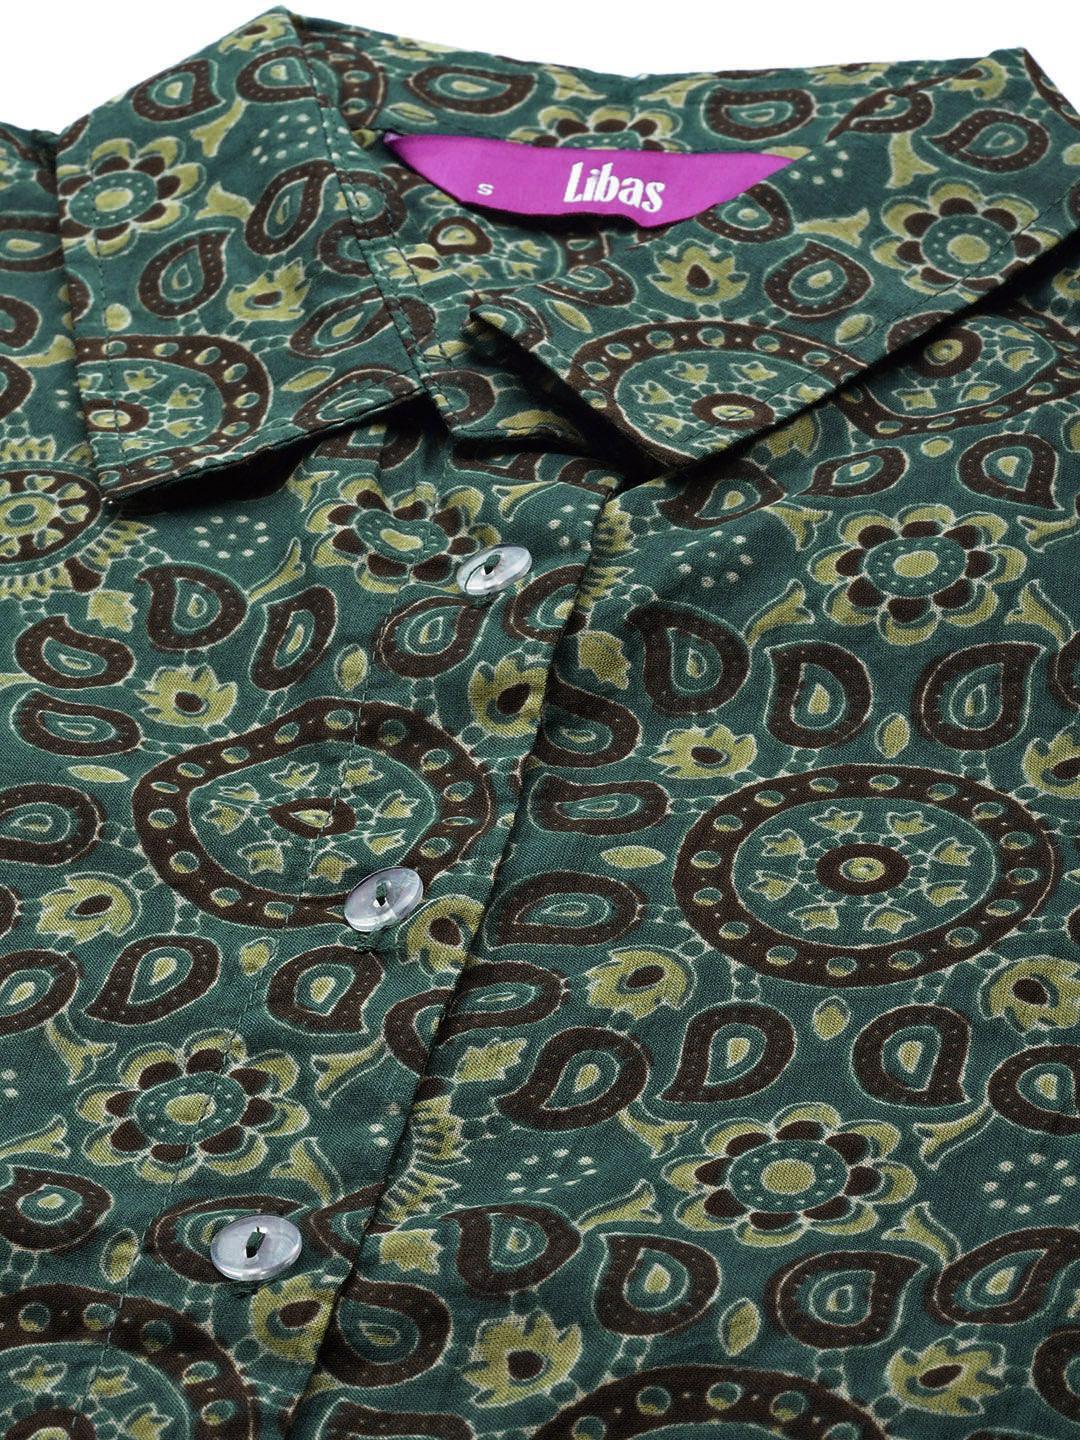 Green Printed Cotton Night Suit - ShopLibas